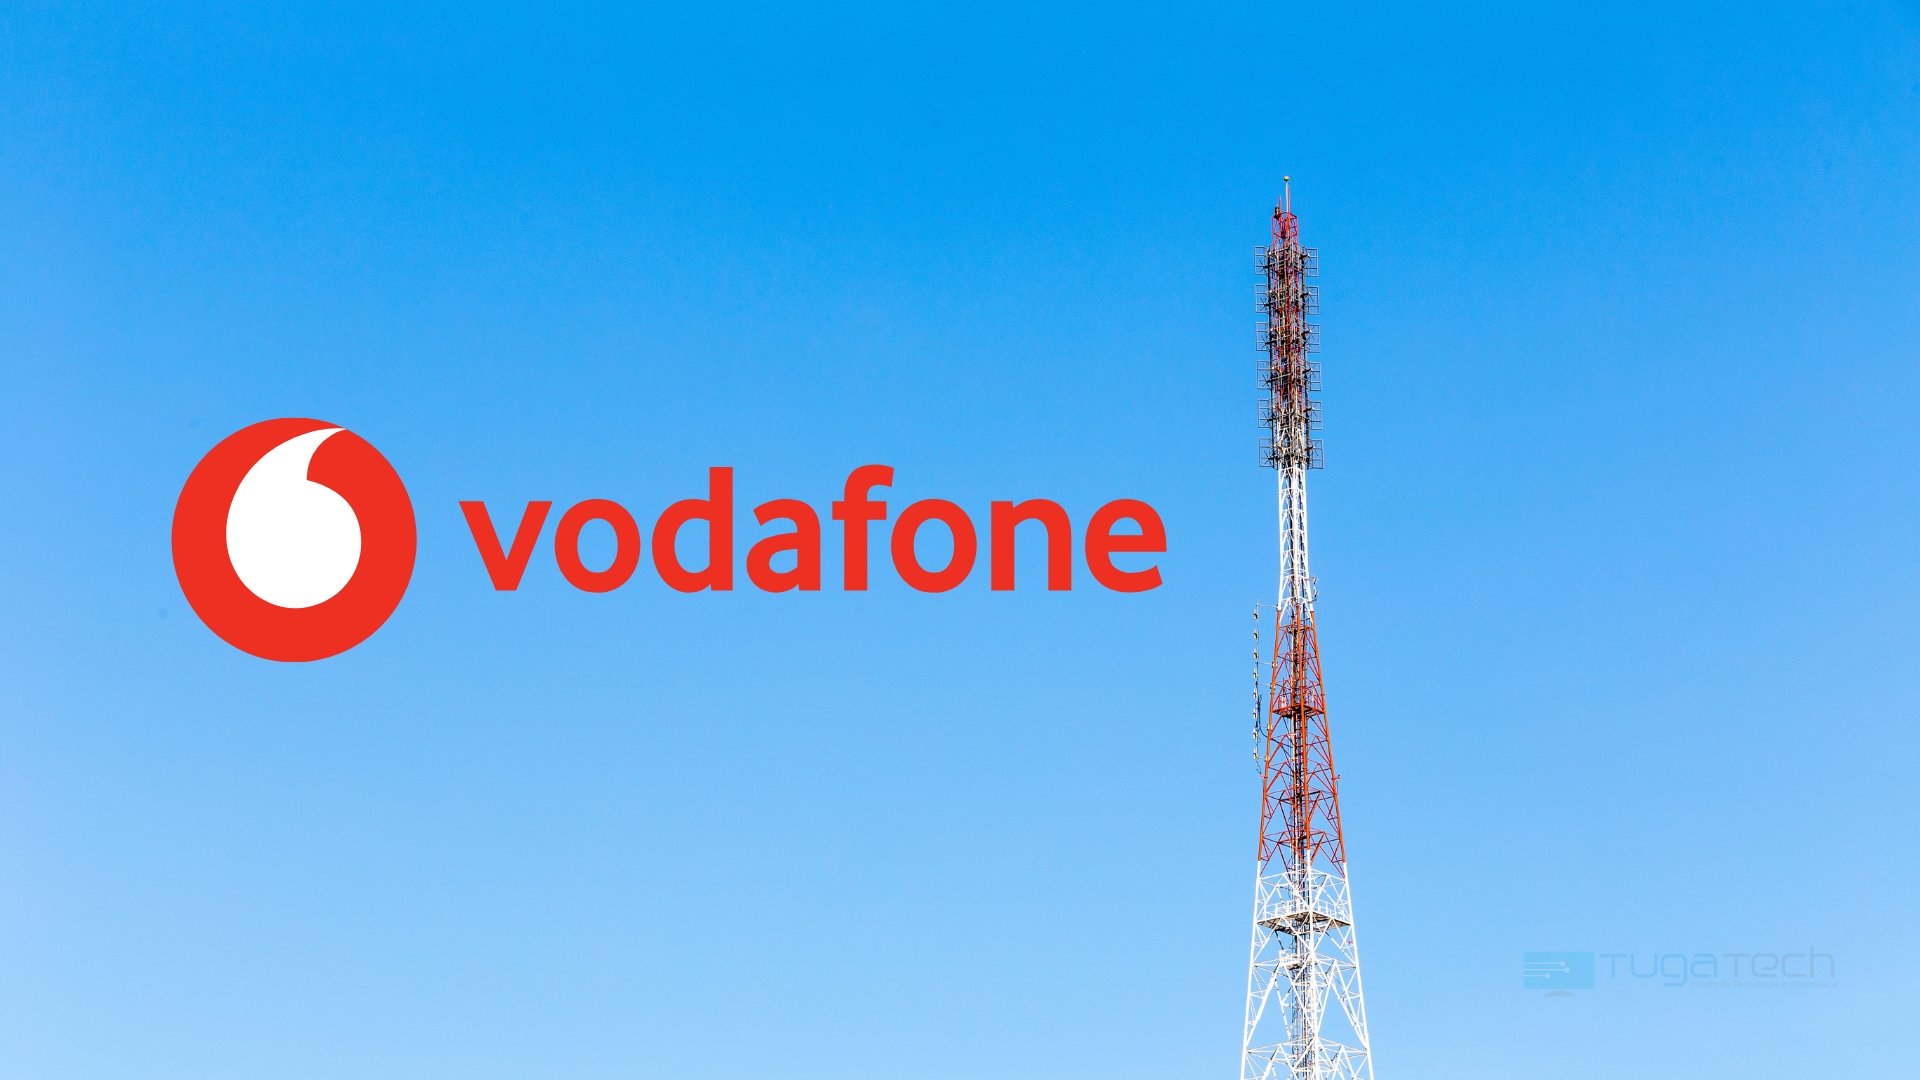 Vodafone antena